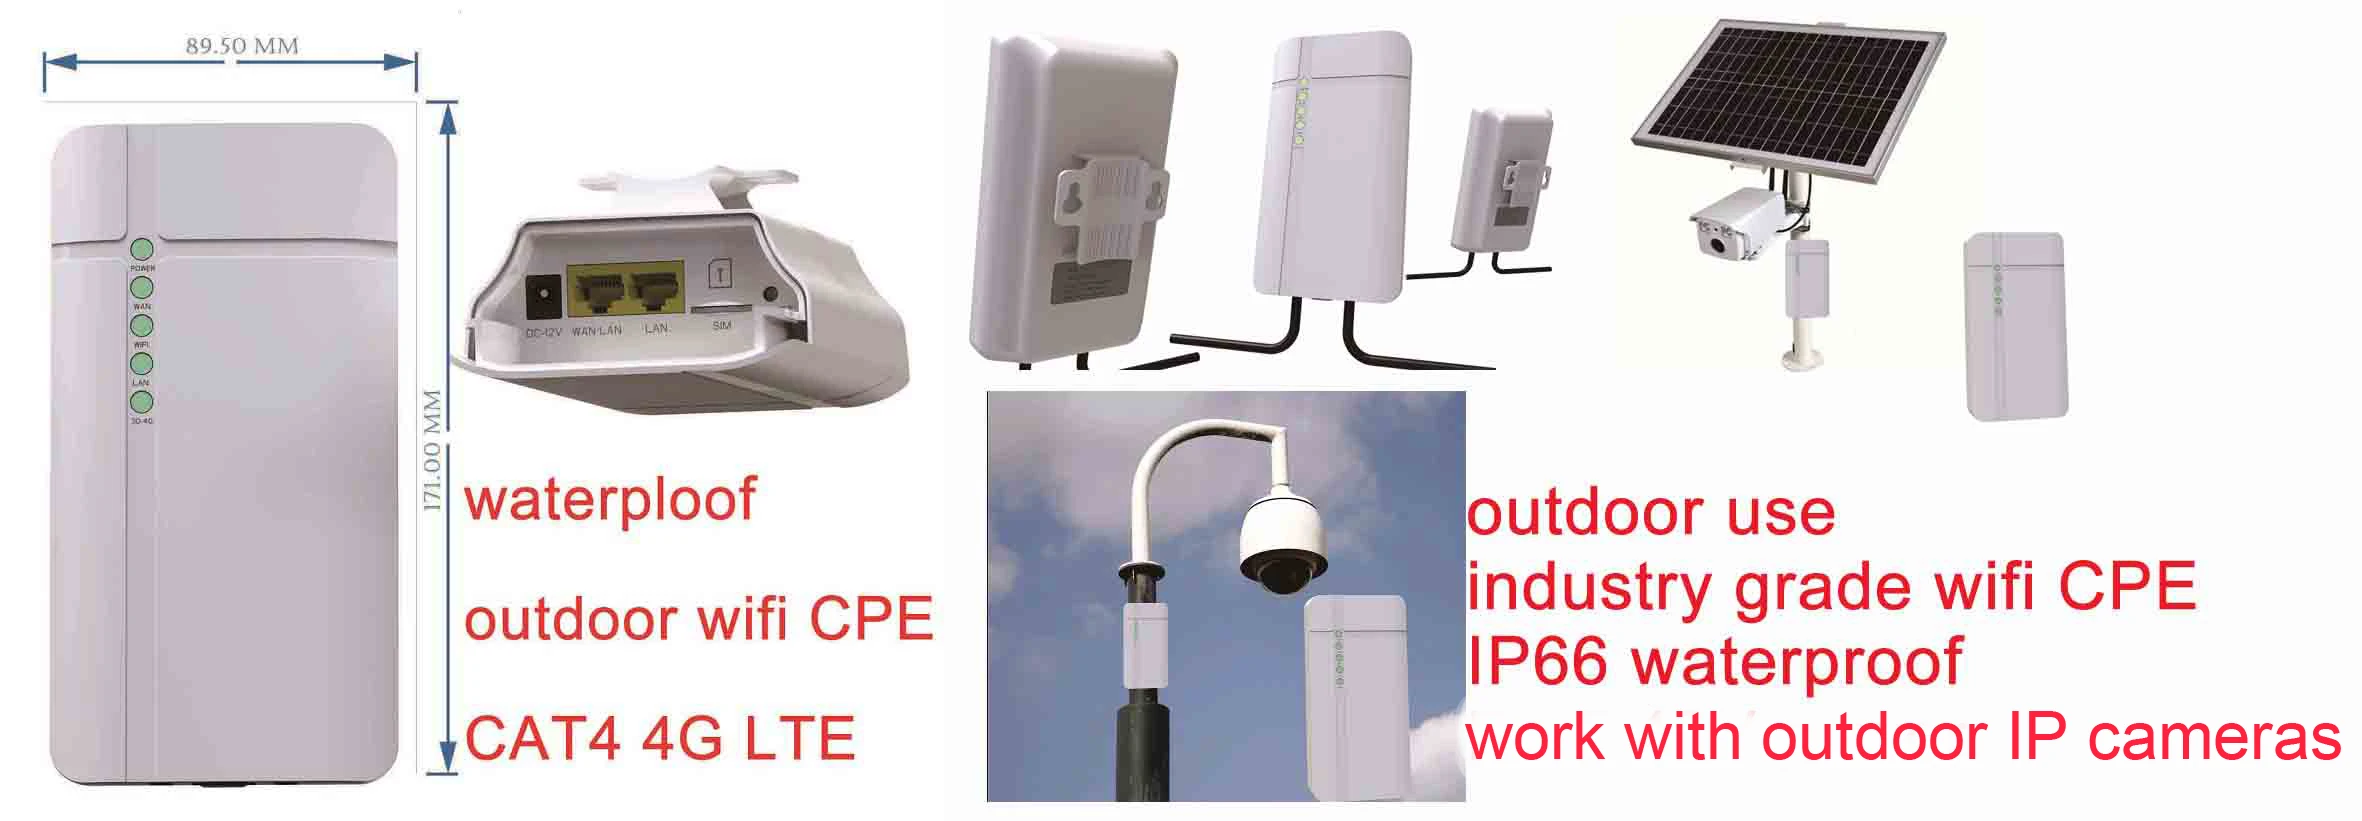 GC112 Водонепроницаемый Открытый 4G CPE роутер CAT4 LTE WiFi роутер 3g/4G sim-карта для ip-камеры снаружи WiFi покрытие